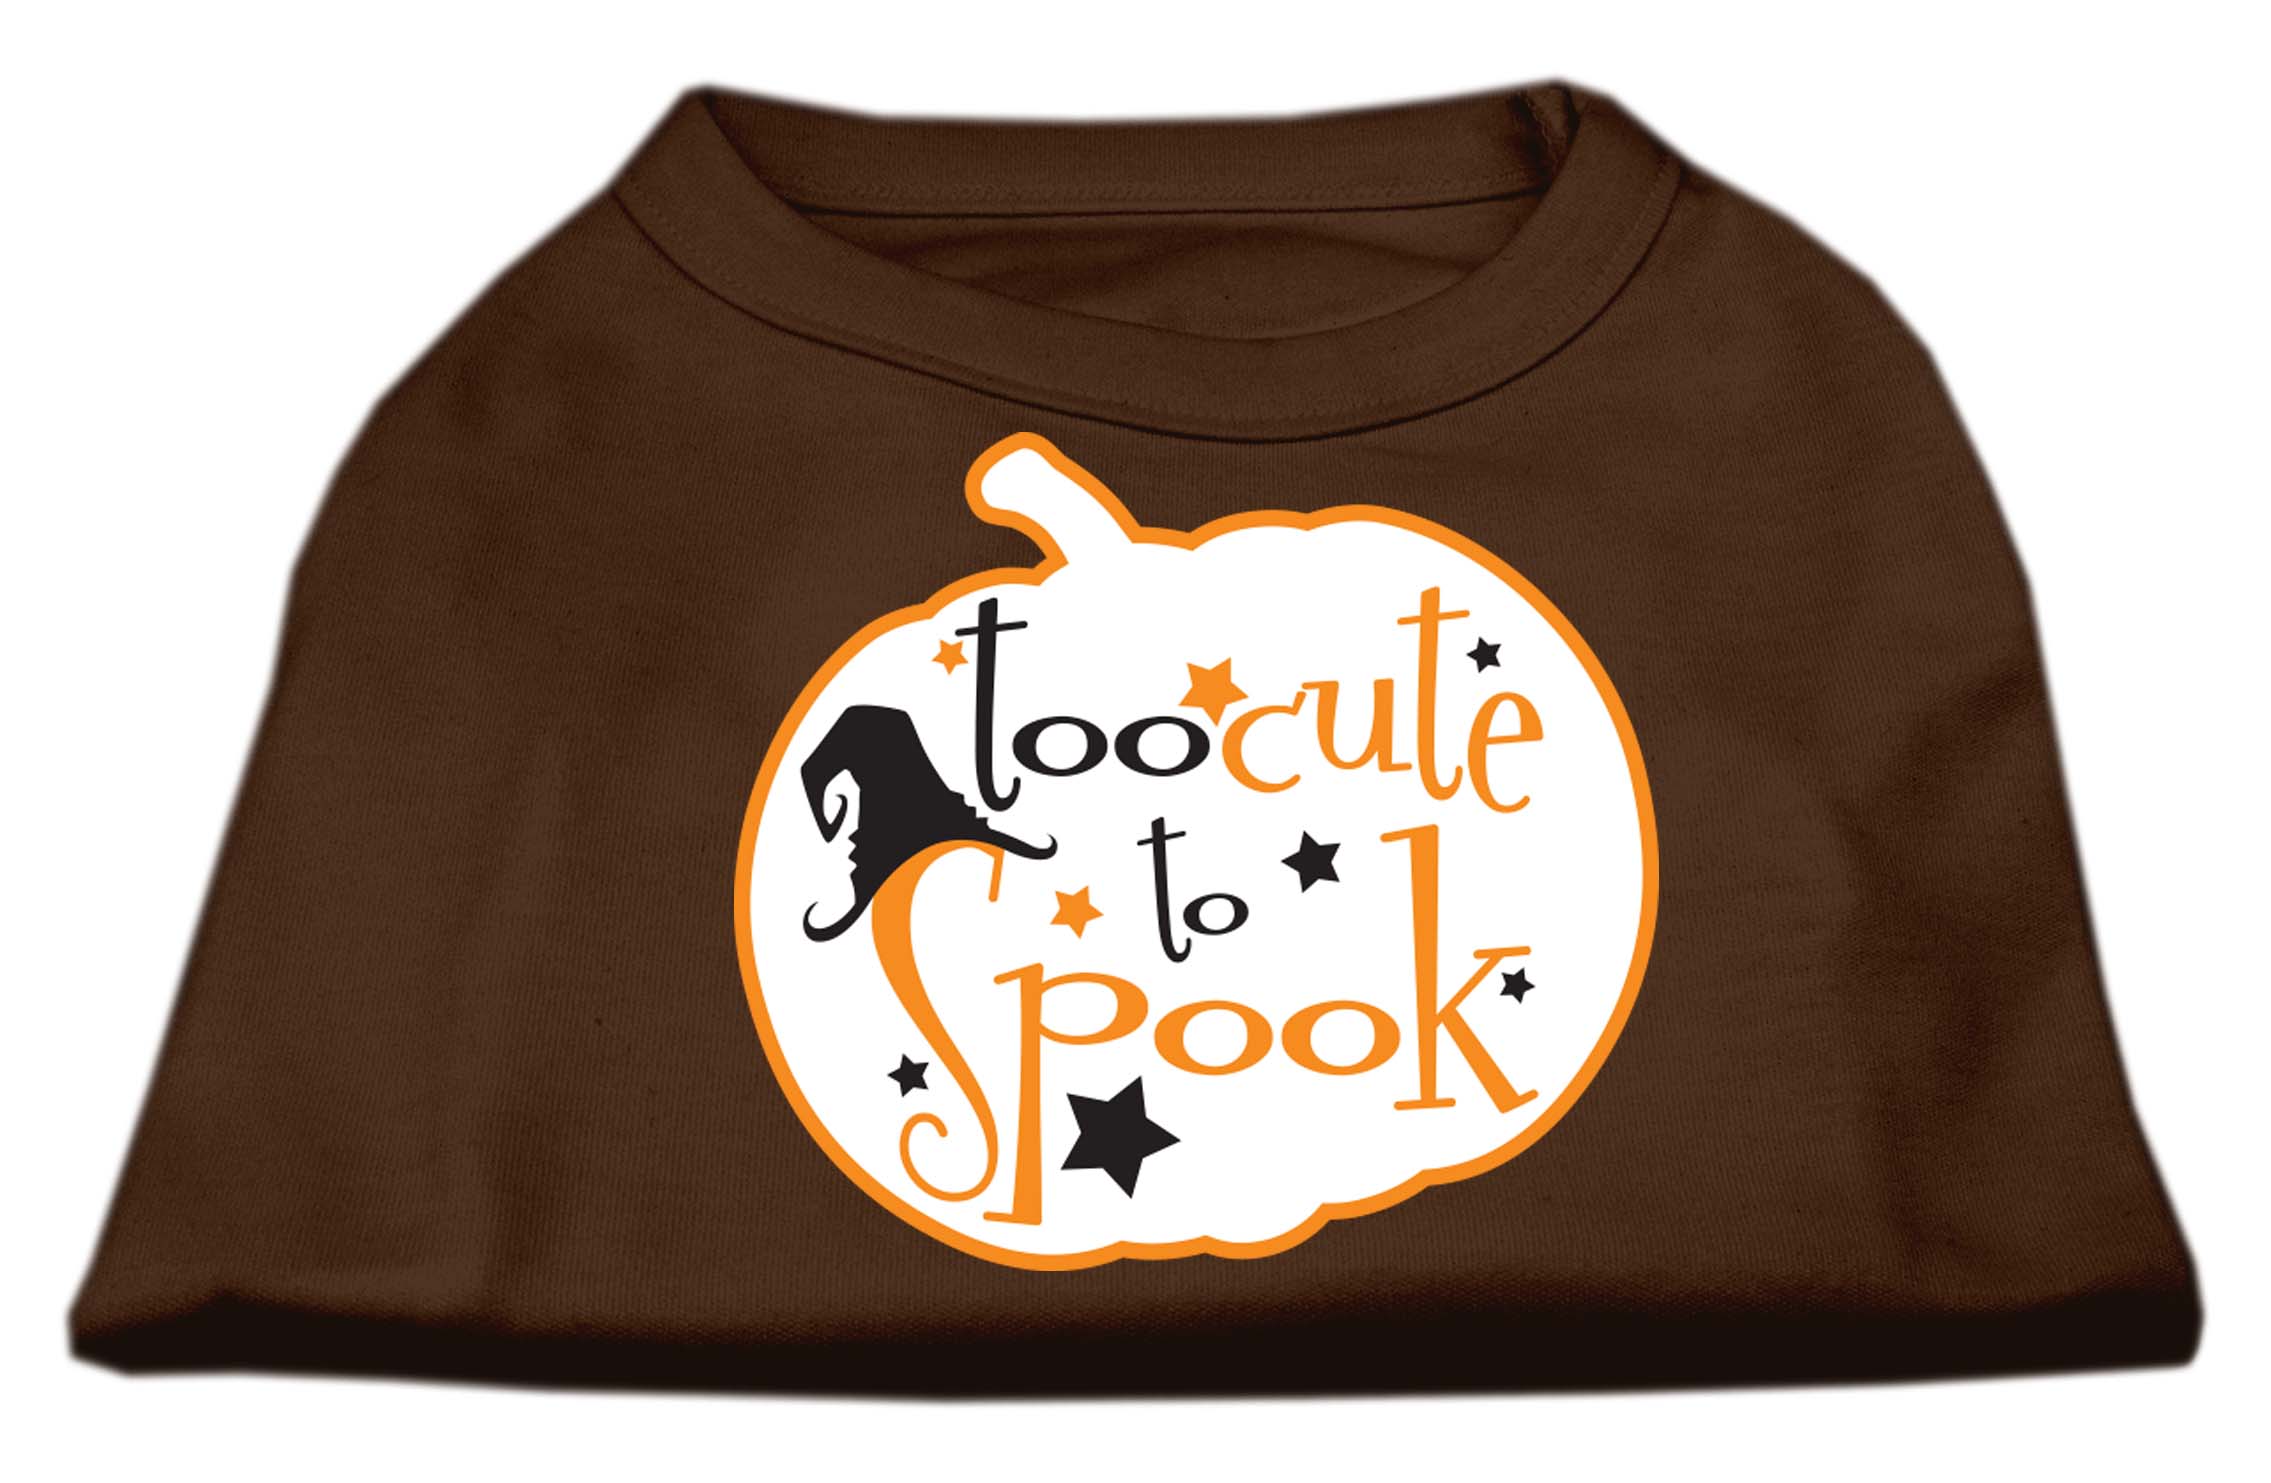 Too Cute to Spook Screen Print Dog Shirt Brown XS